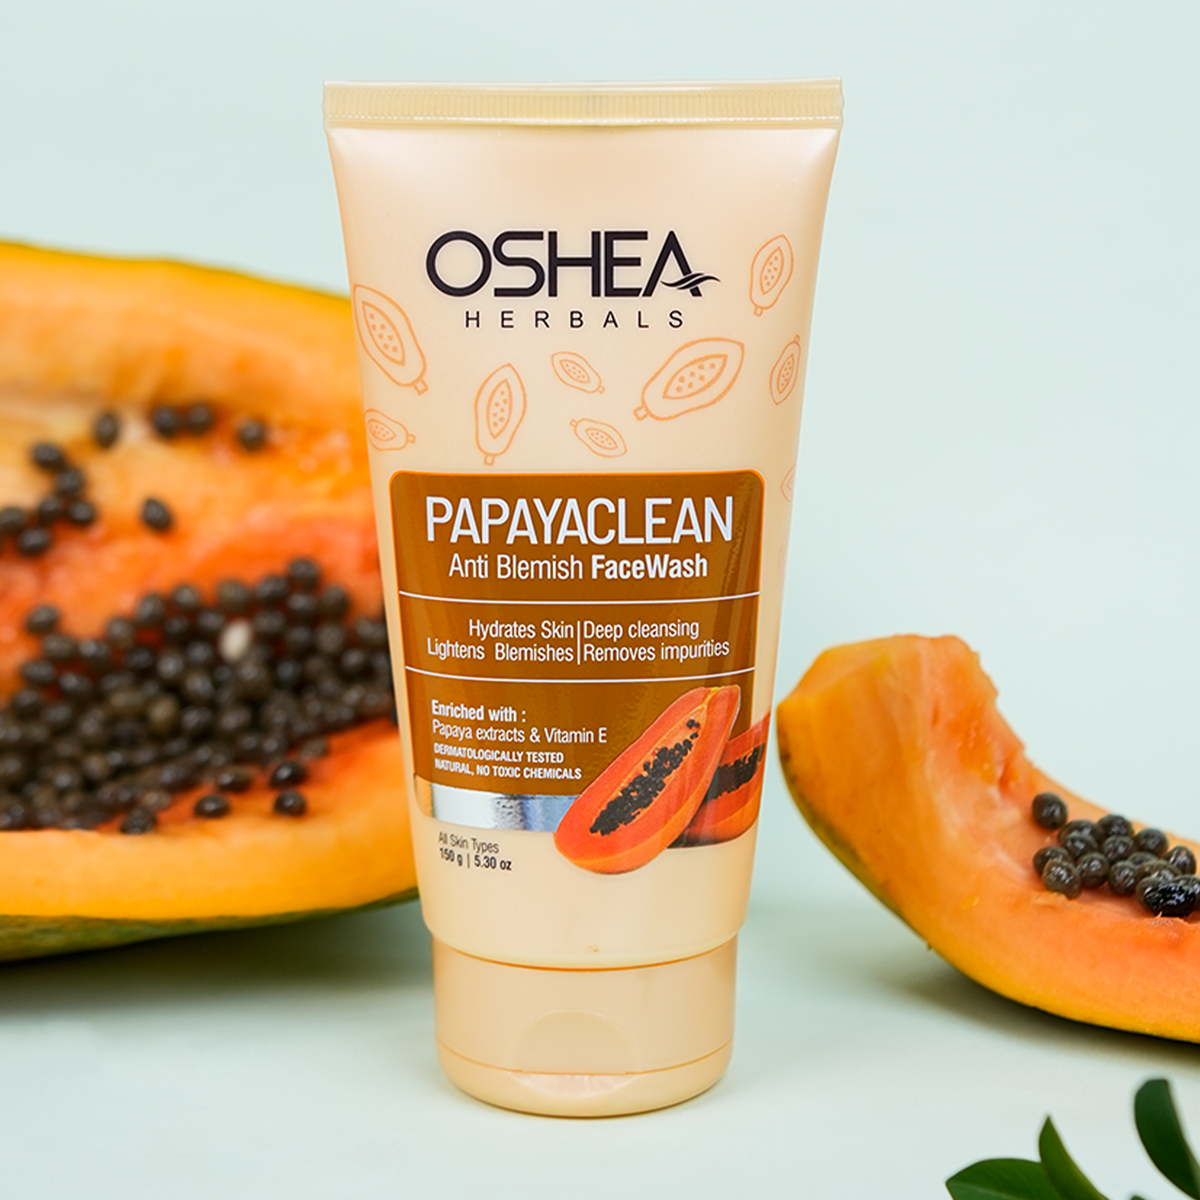 Papayaclean Anti Blemish Face wash Oshea Herbals